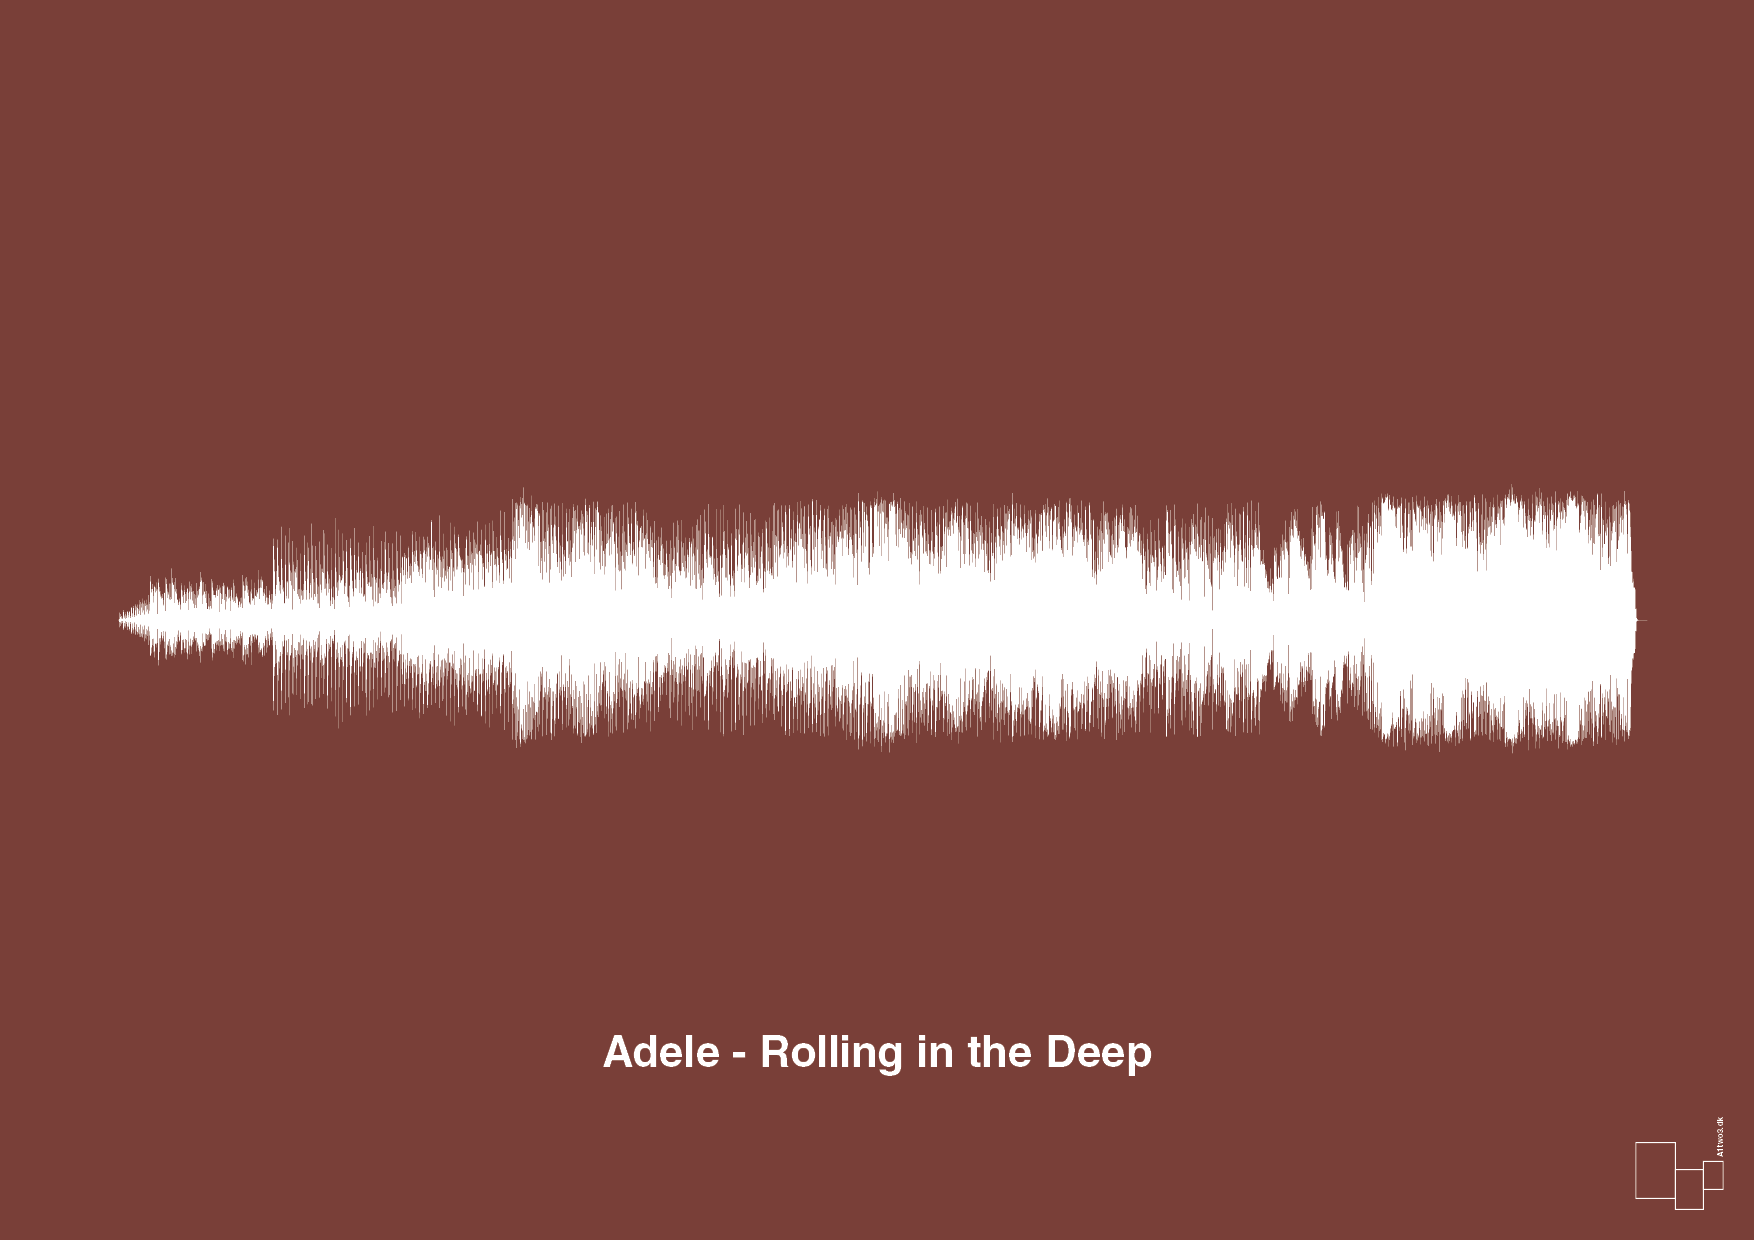 adele - rolling in the deep - Plakat med Musik i Red Pepper